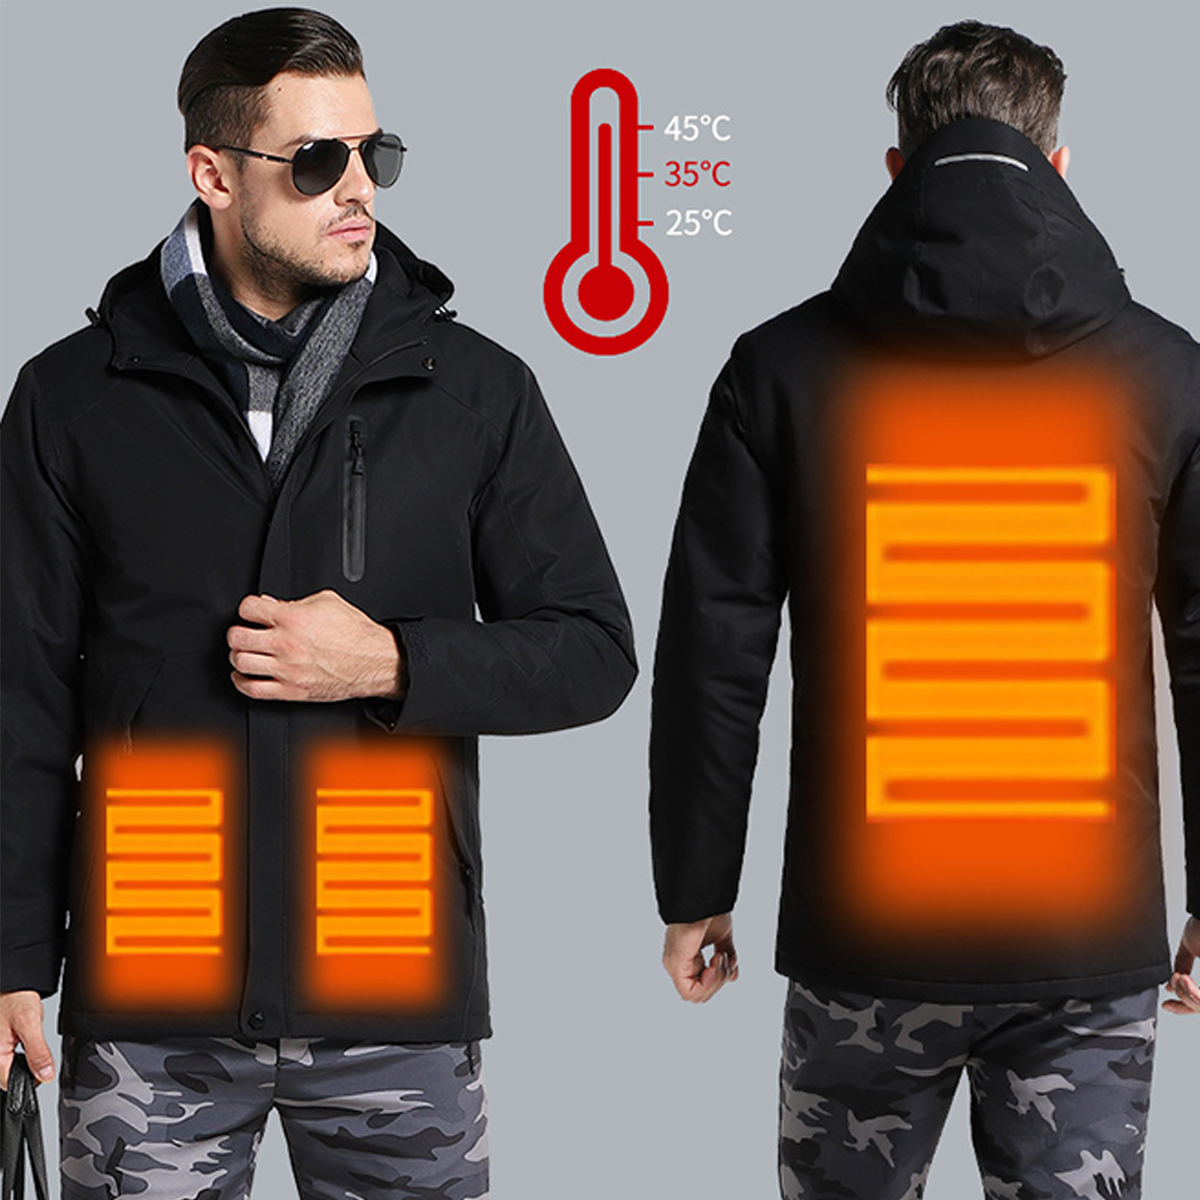 

Man Woman Electronic USB Heated Jacket Intelligent Heating Hooded Work Motorcycle Skiing Riding Coat